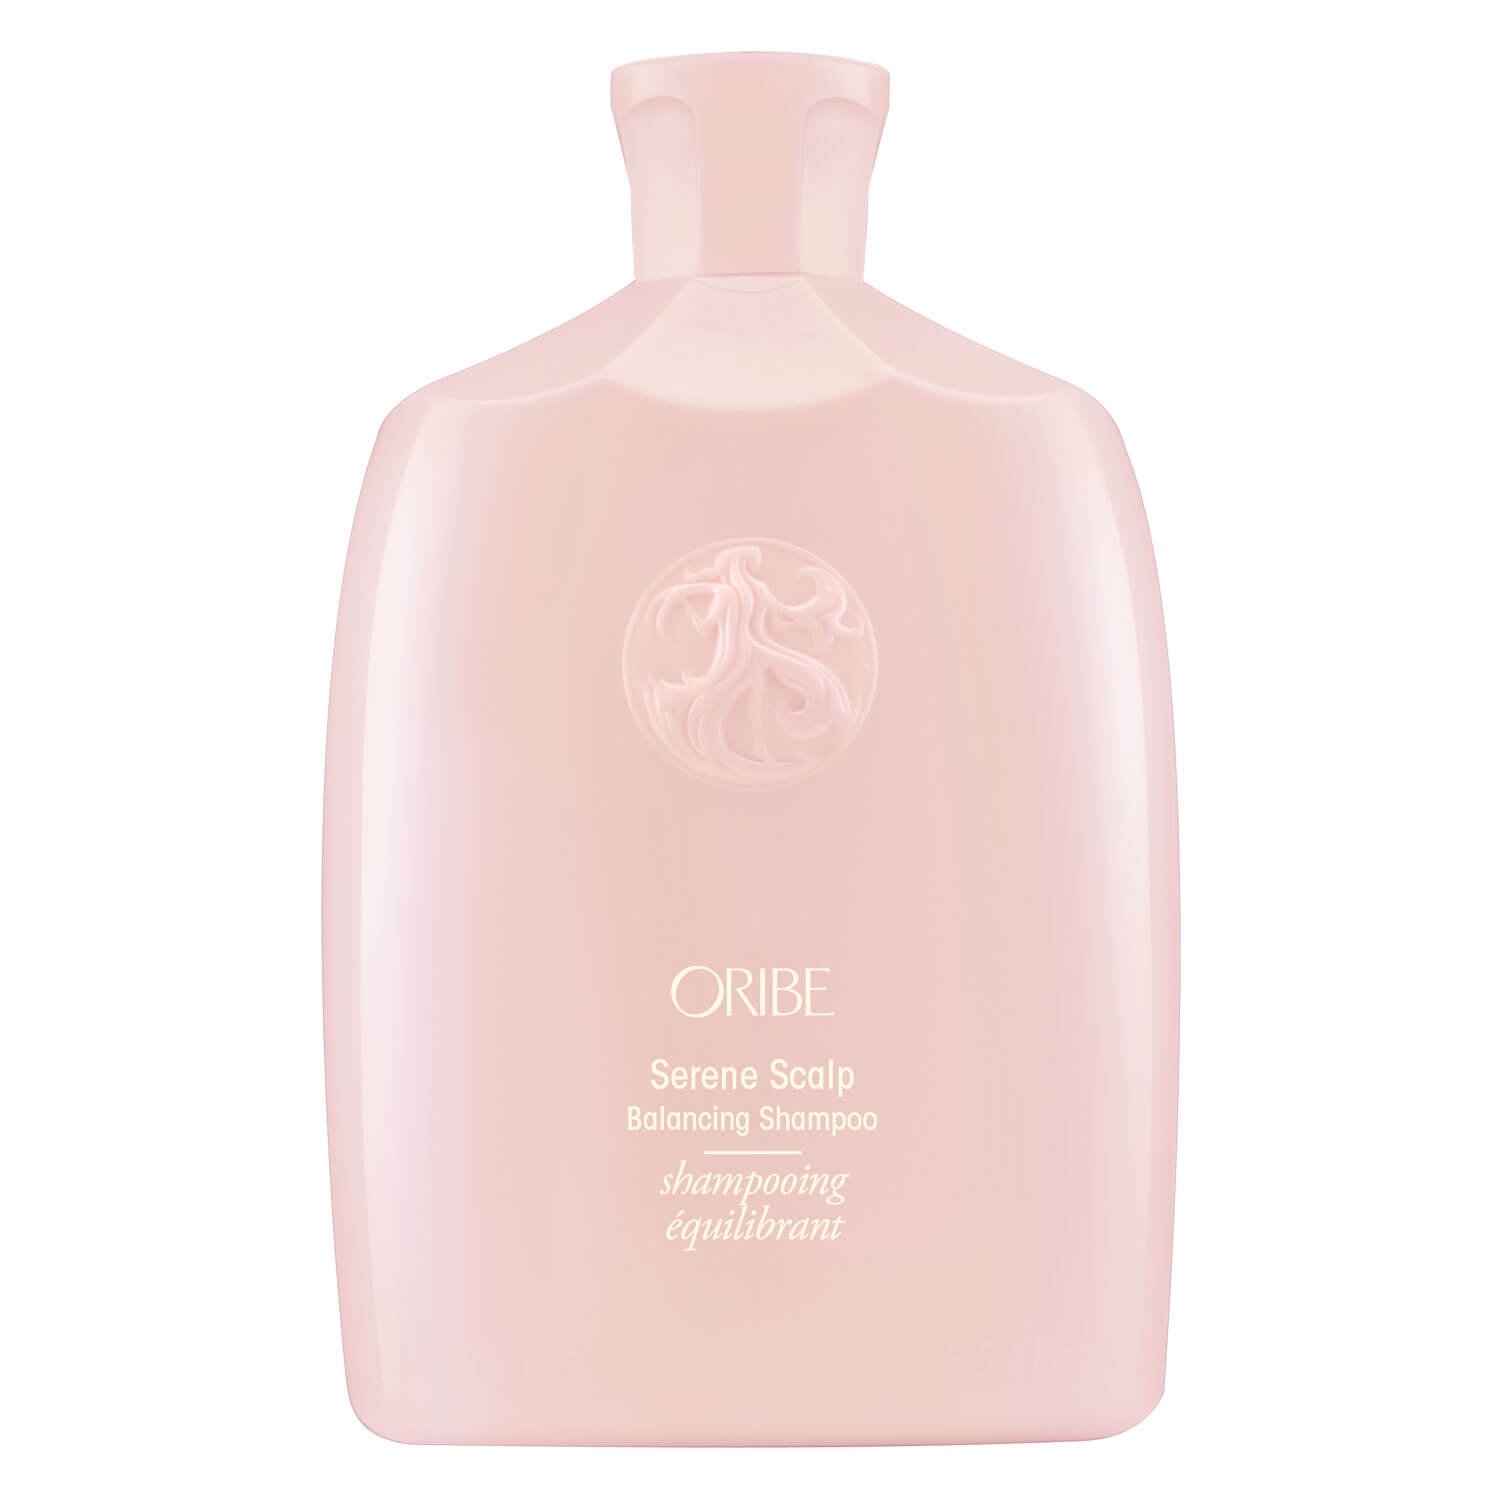 Produktbild von Oribe Care - Serene Scalp Balancing Shampoo